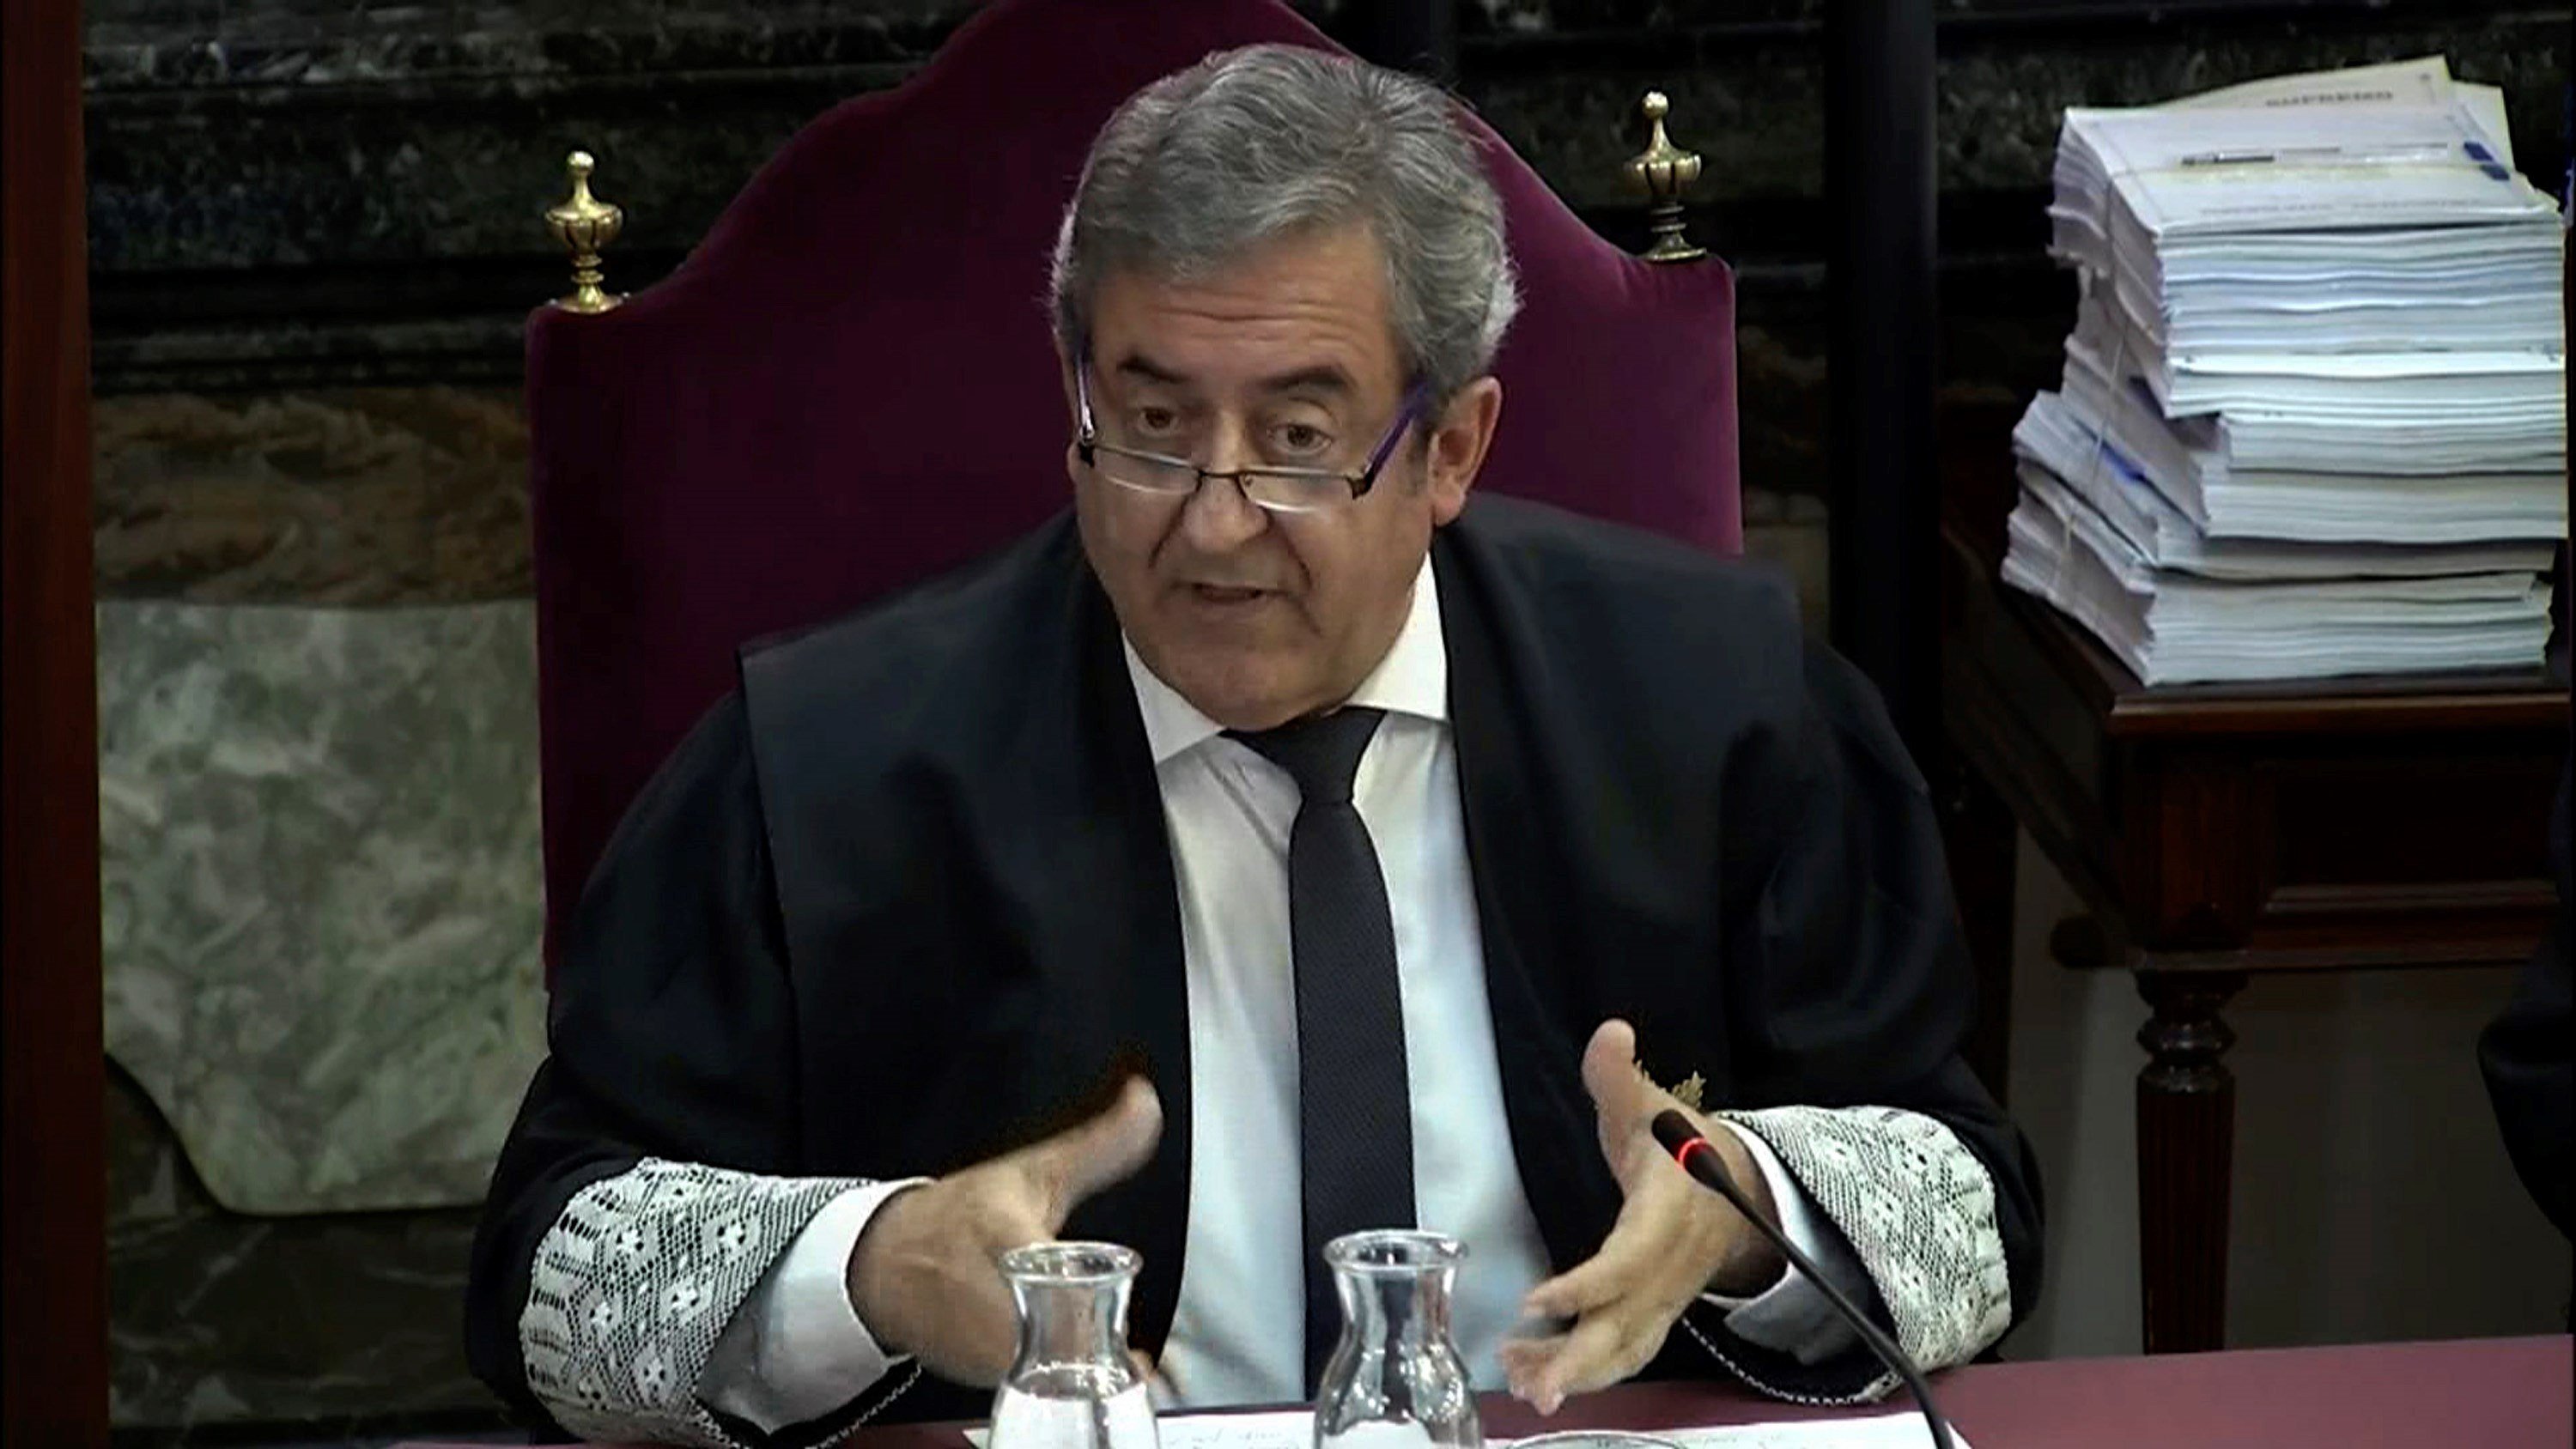 El fiscal Zaragoza pide no "desarmar al Estado" contra Catalunya